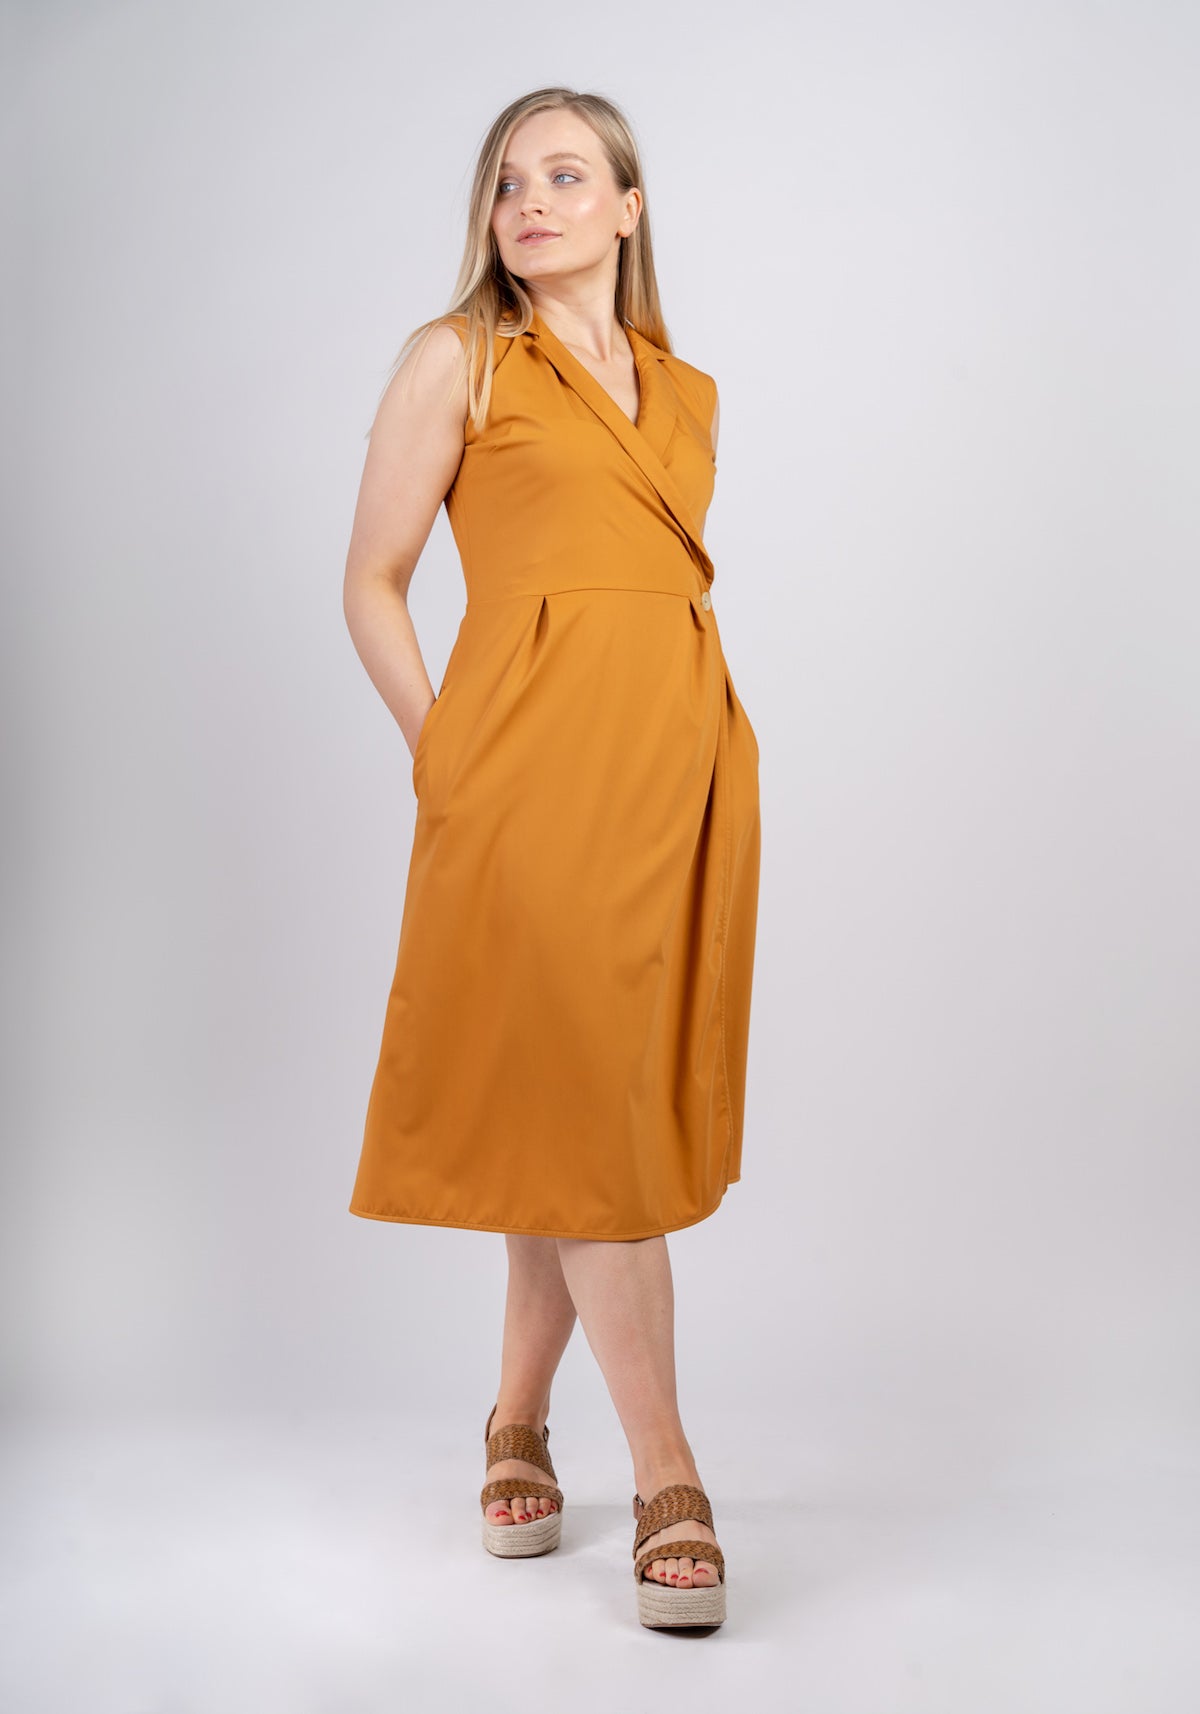 AYANI elegantes gelb Kleid. Wickelkleid in gelb. Etuikleid online kaufen.